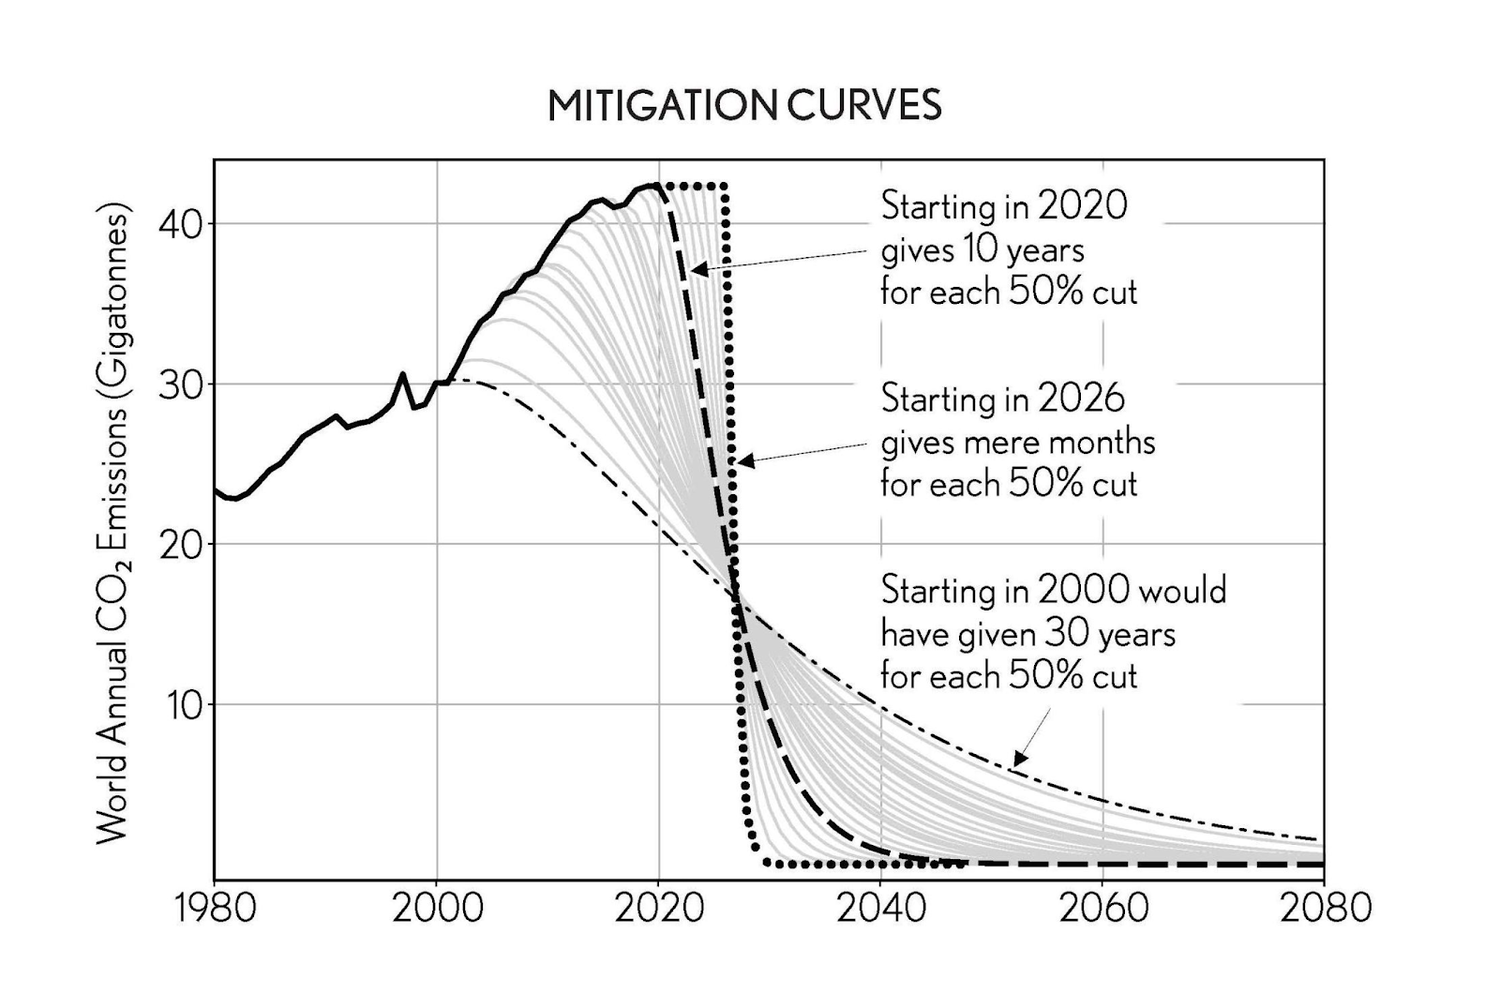 Mitigation curves